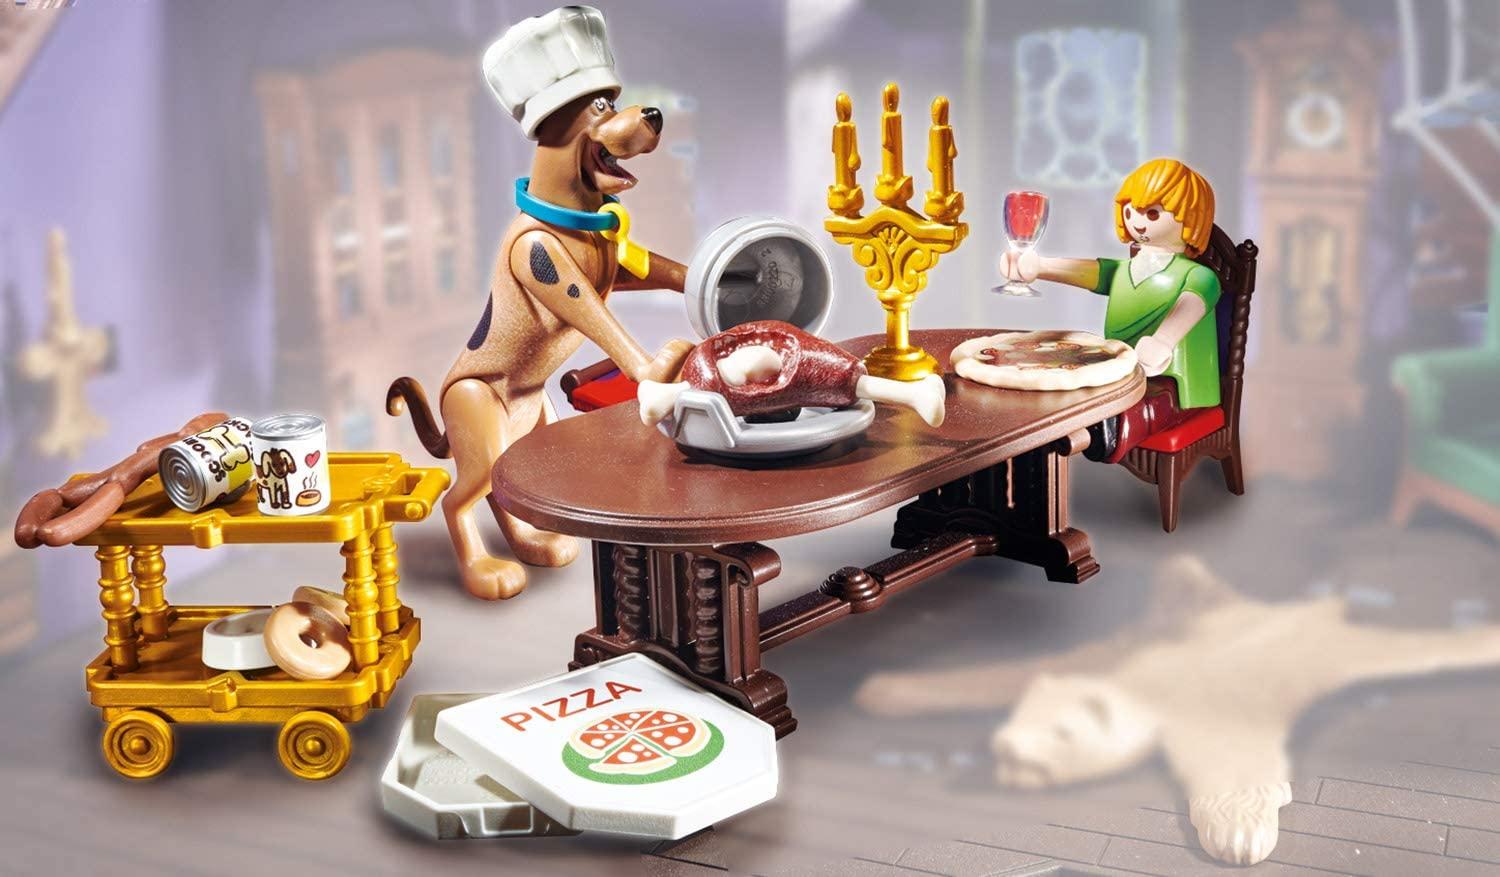 Playmobil 70363 Scooby Doo Dinner With Shaggy Toymaster Ballina